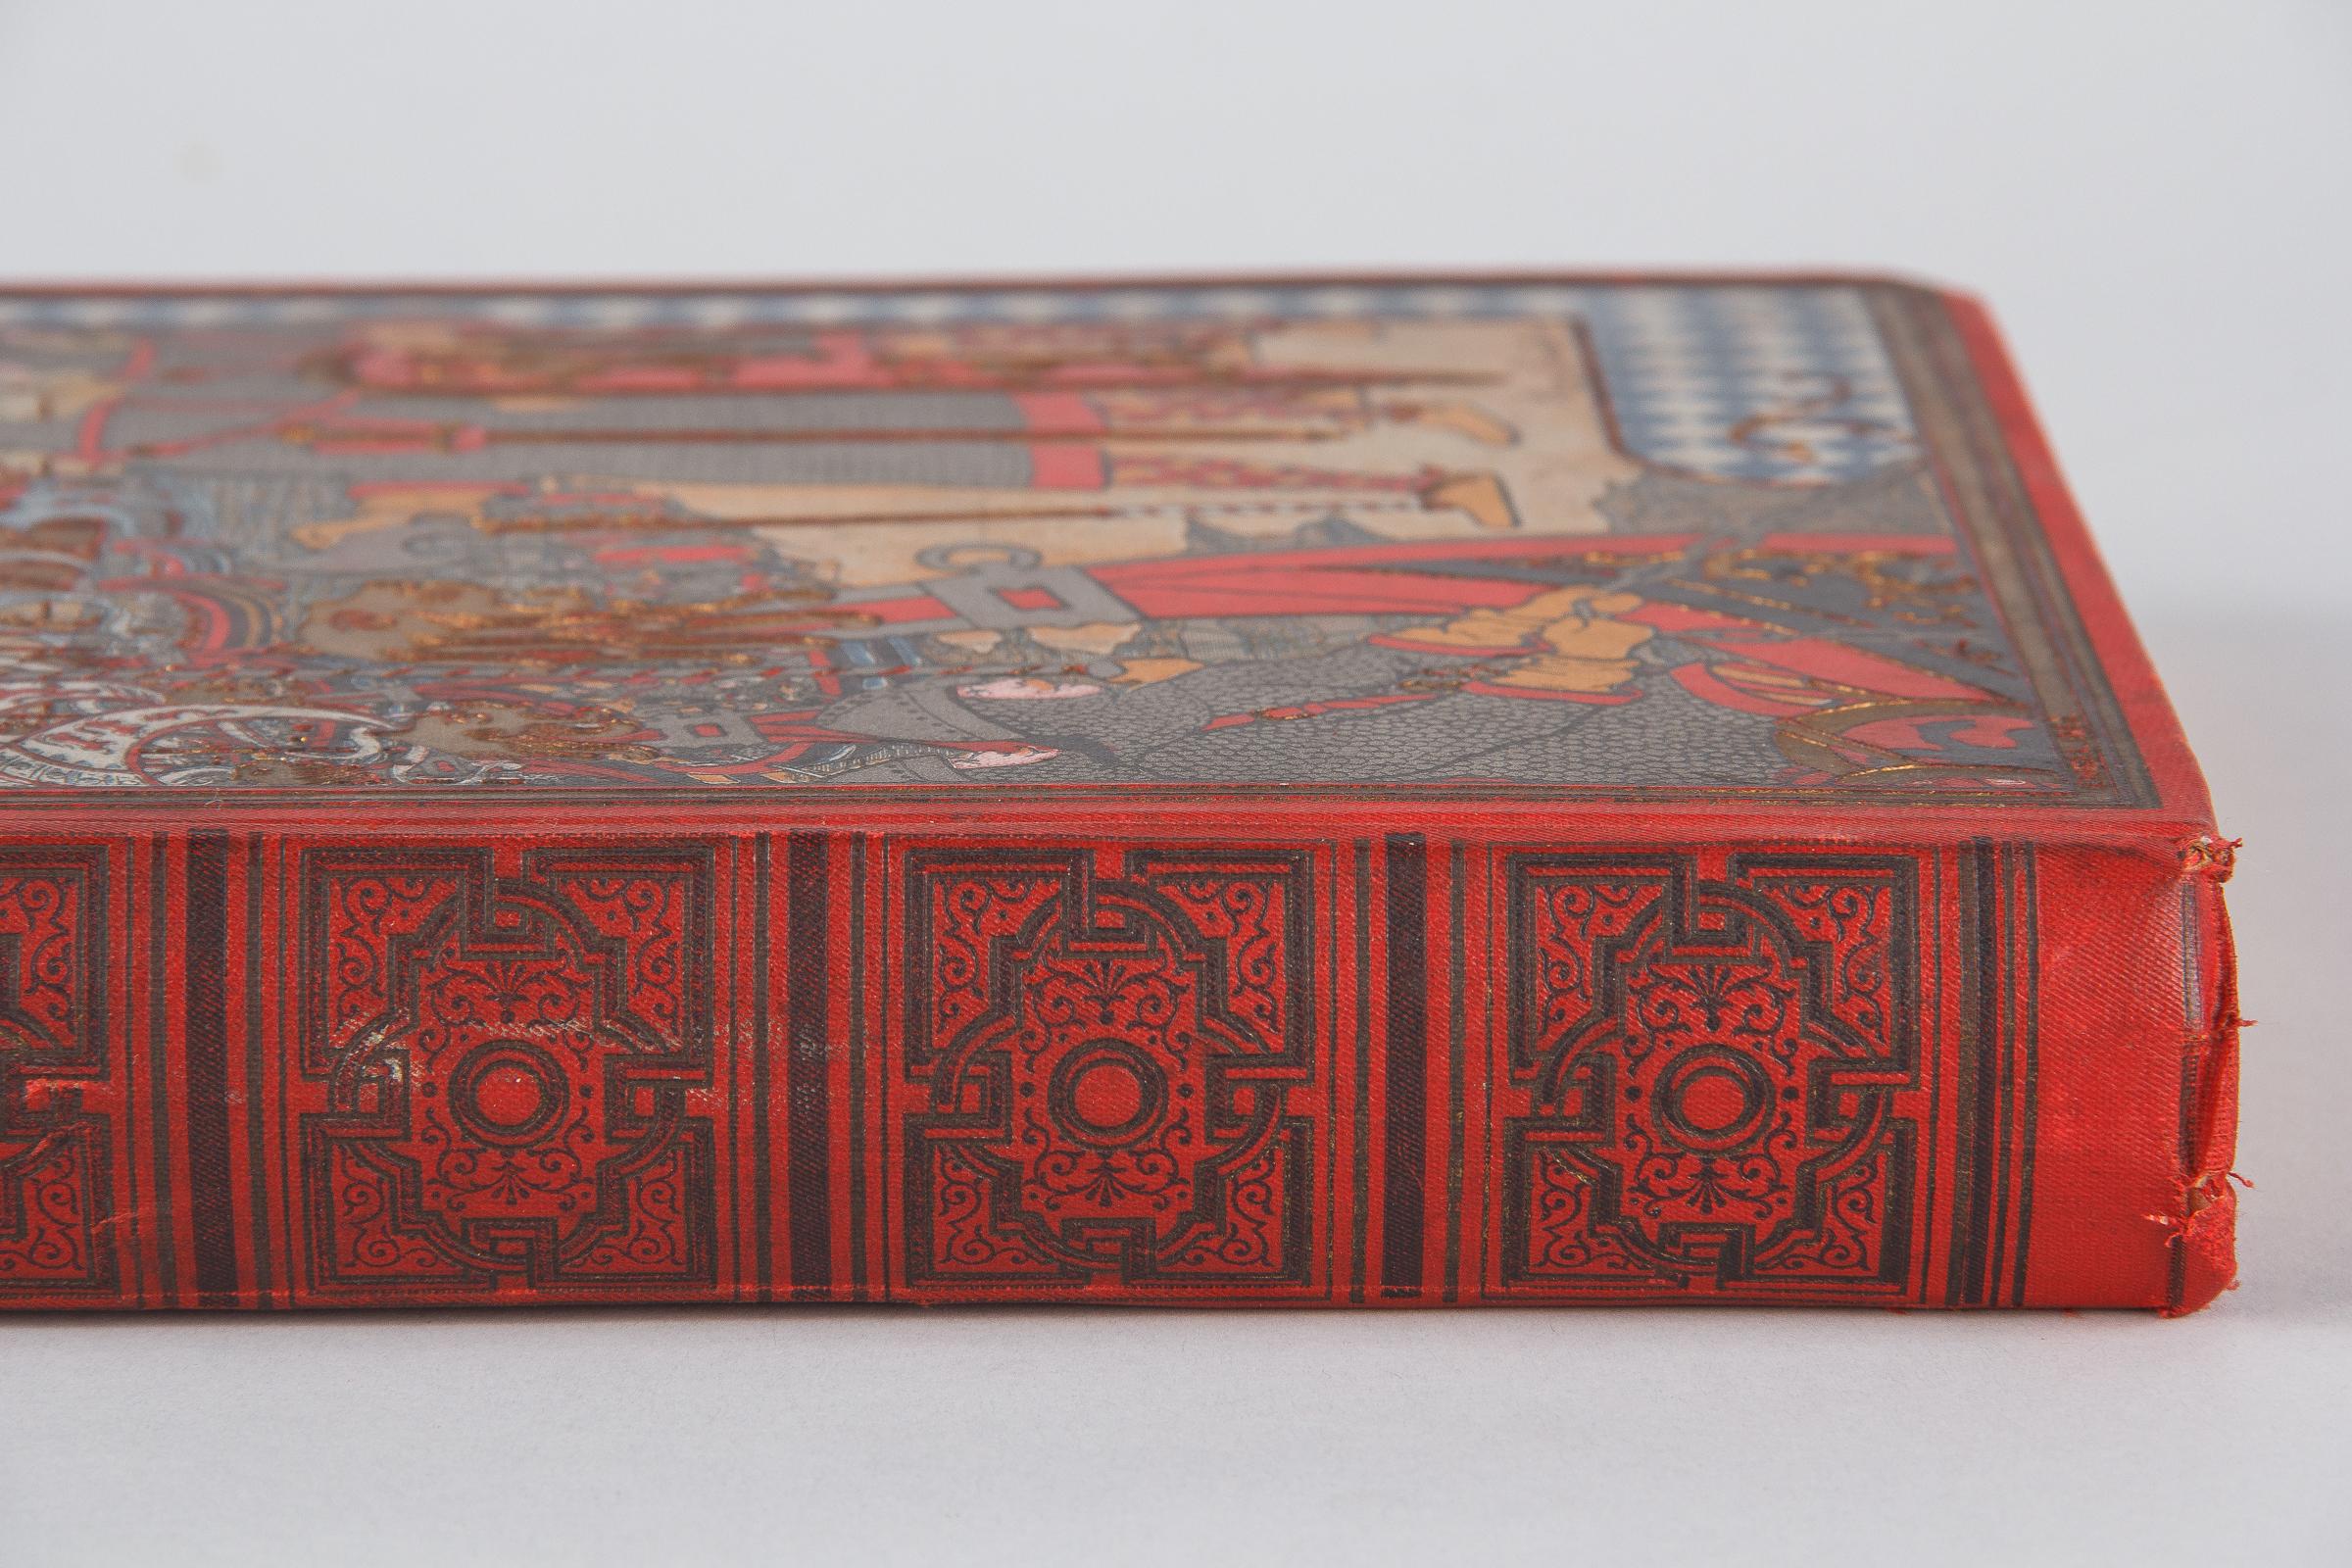 French Book-Histoire de la Conquete de L'Angleterre by Augustin Thierry, 1900 9